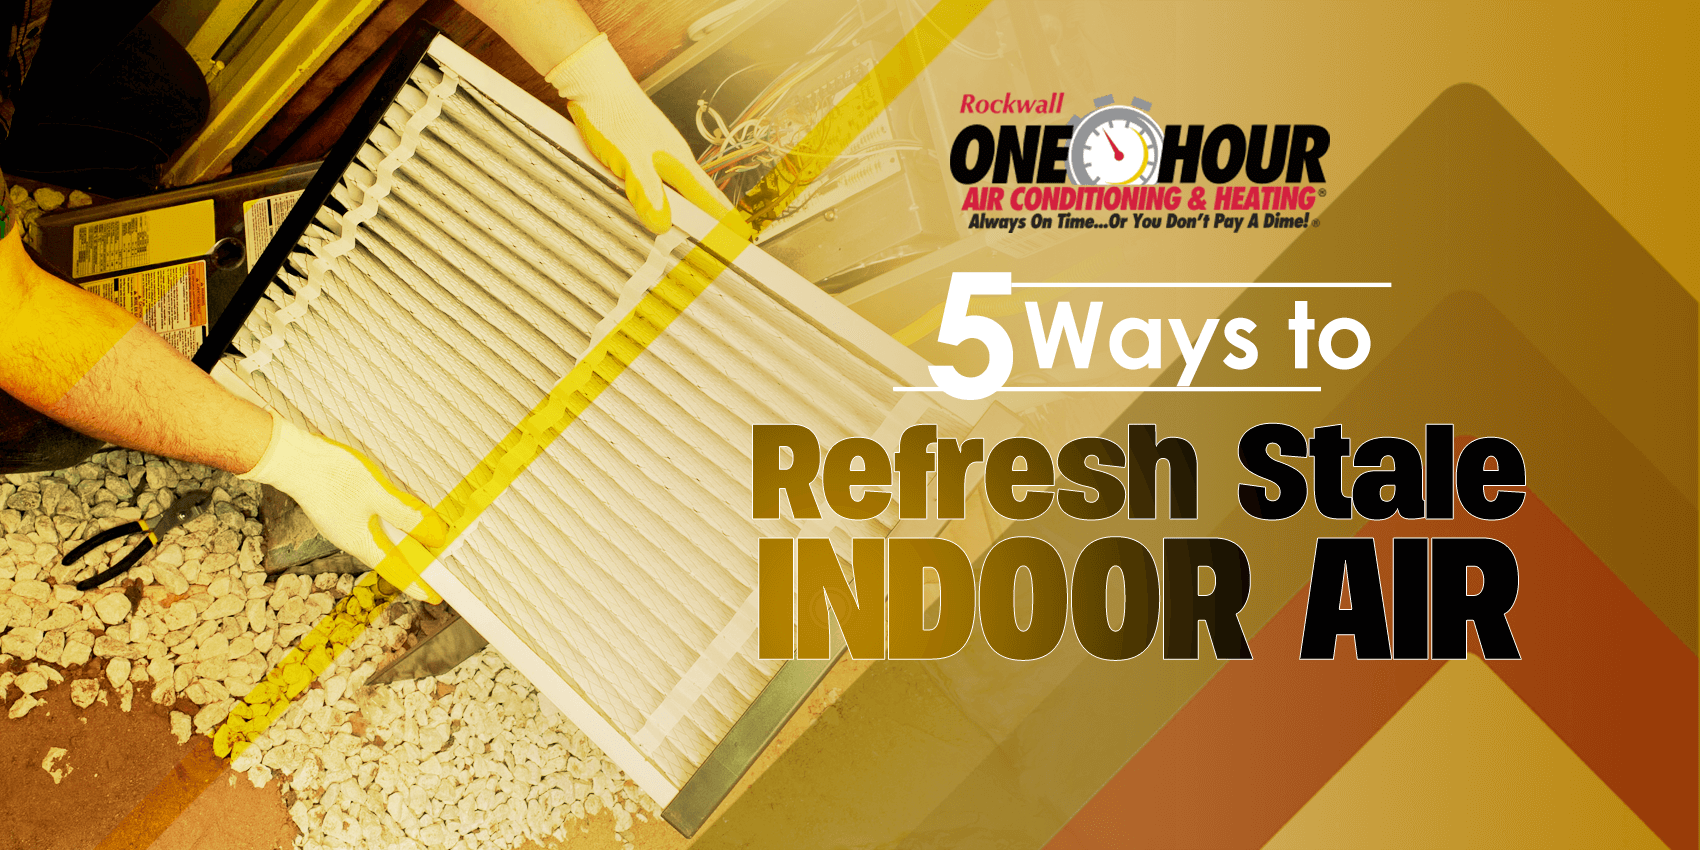 5 Ways to Refresh Stale Indoor Air